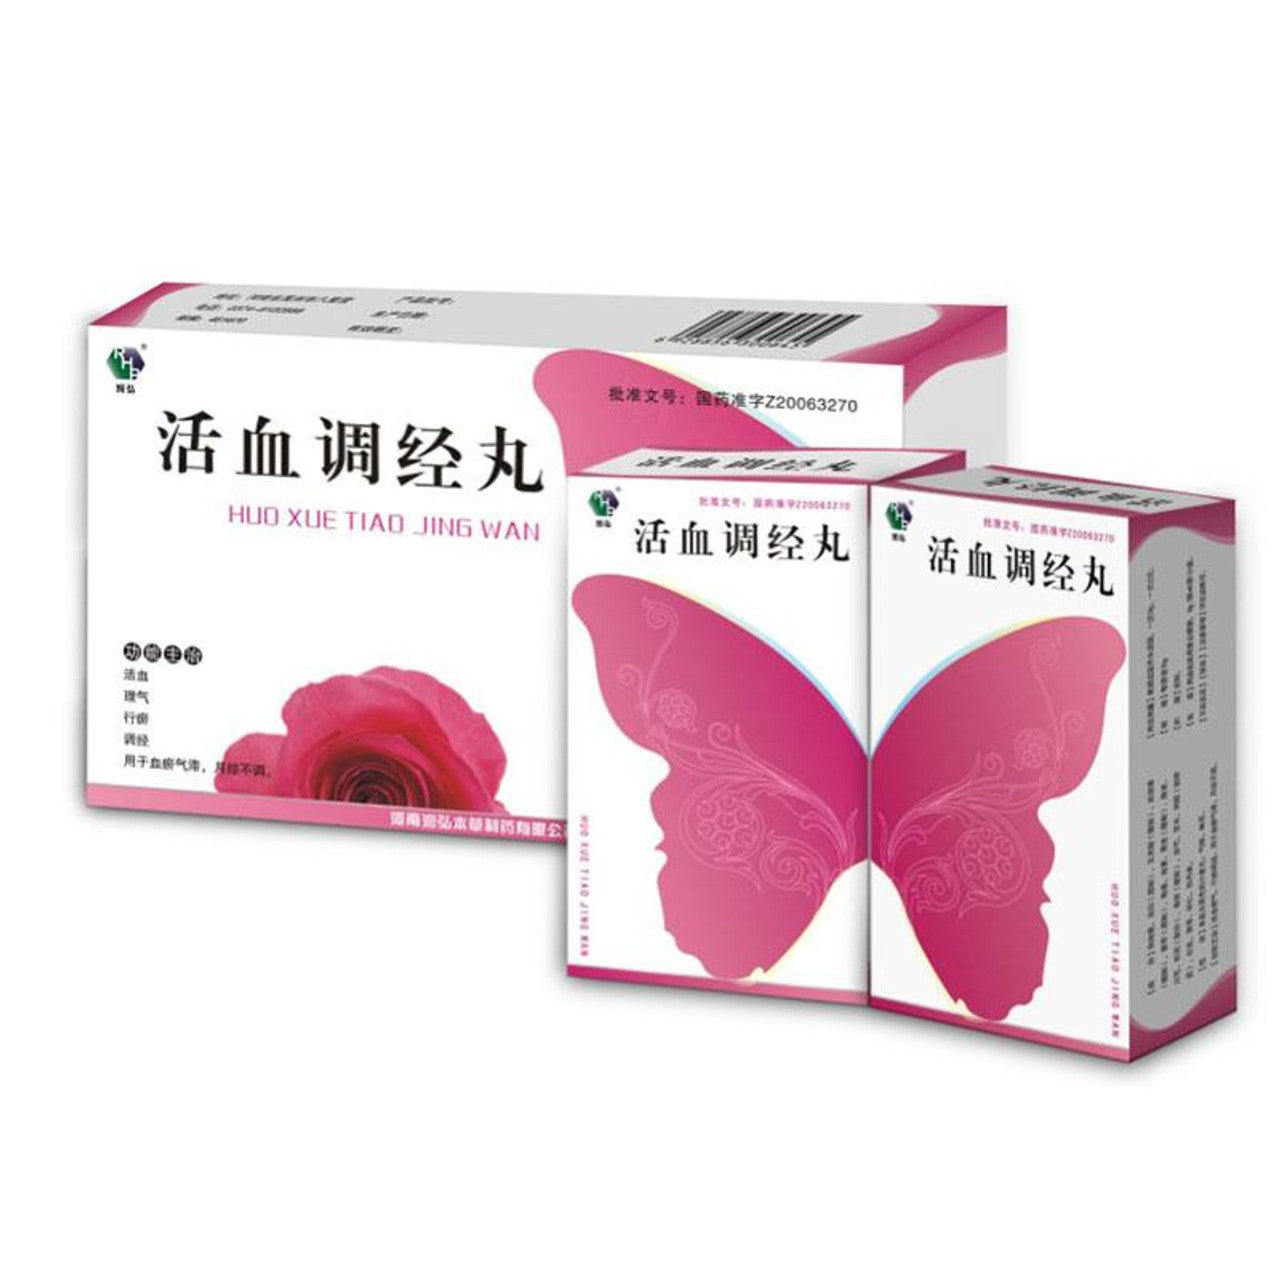 China Herb. RUNHONG brand. Huoxue Tiaojing Wan or Huo Xue Tiao Jing Wan or Huoxue Tiaojing Pills for  blood stasis and qi stagnation, irregular menstruation.